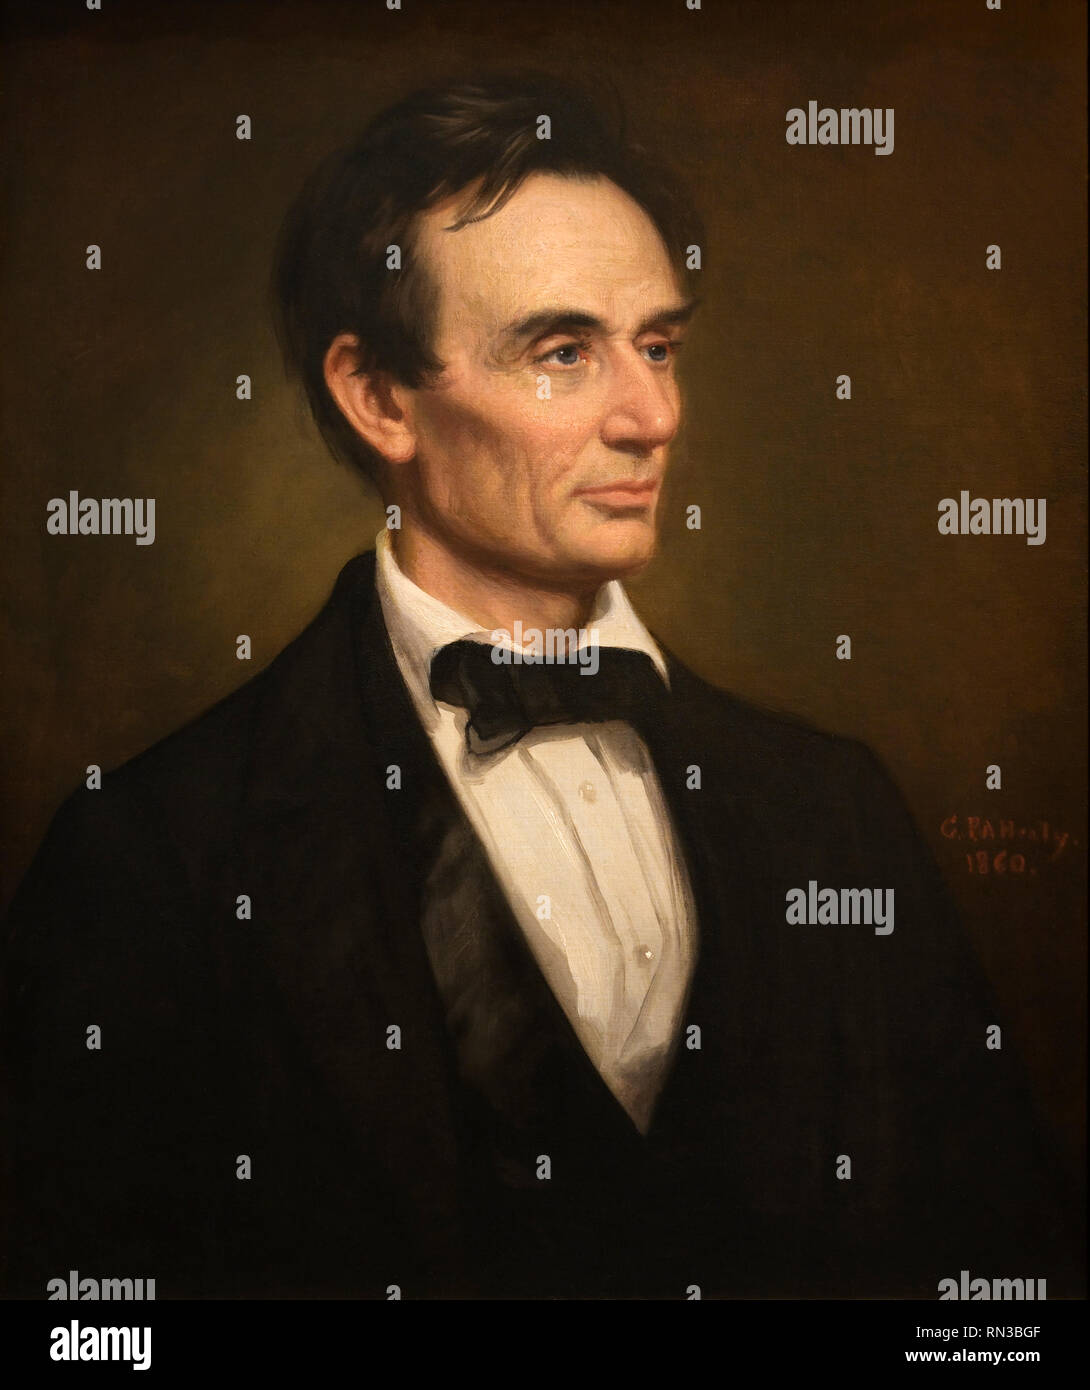 Abraham Lincoln portrait Stock Photo